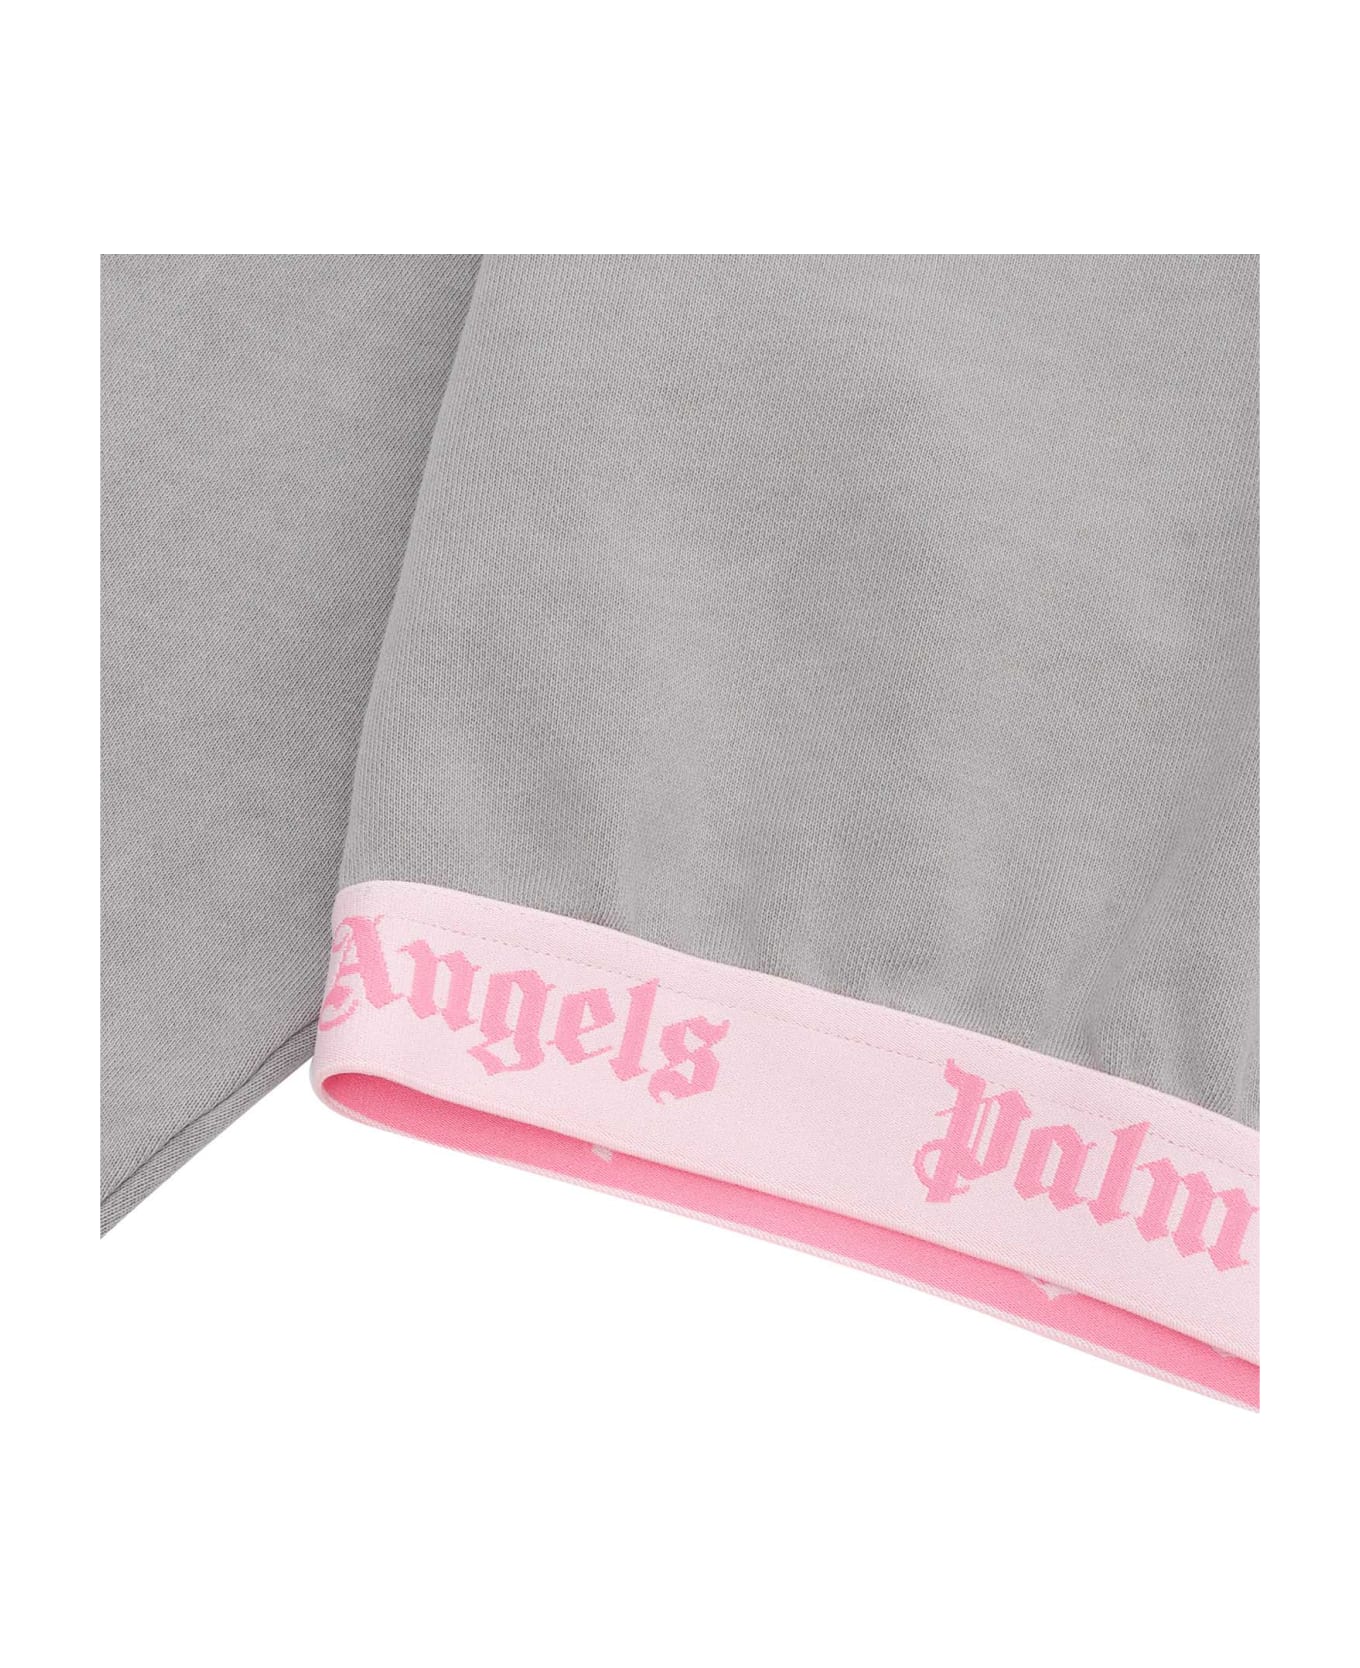 Palm Angels Gray Cropped Sweatshirt - GREY